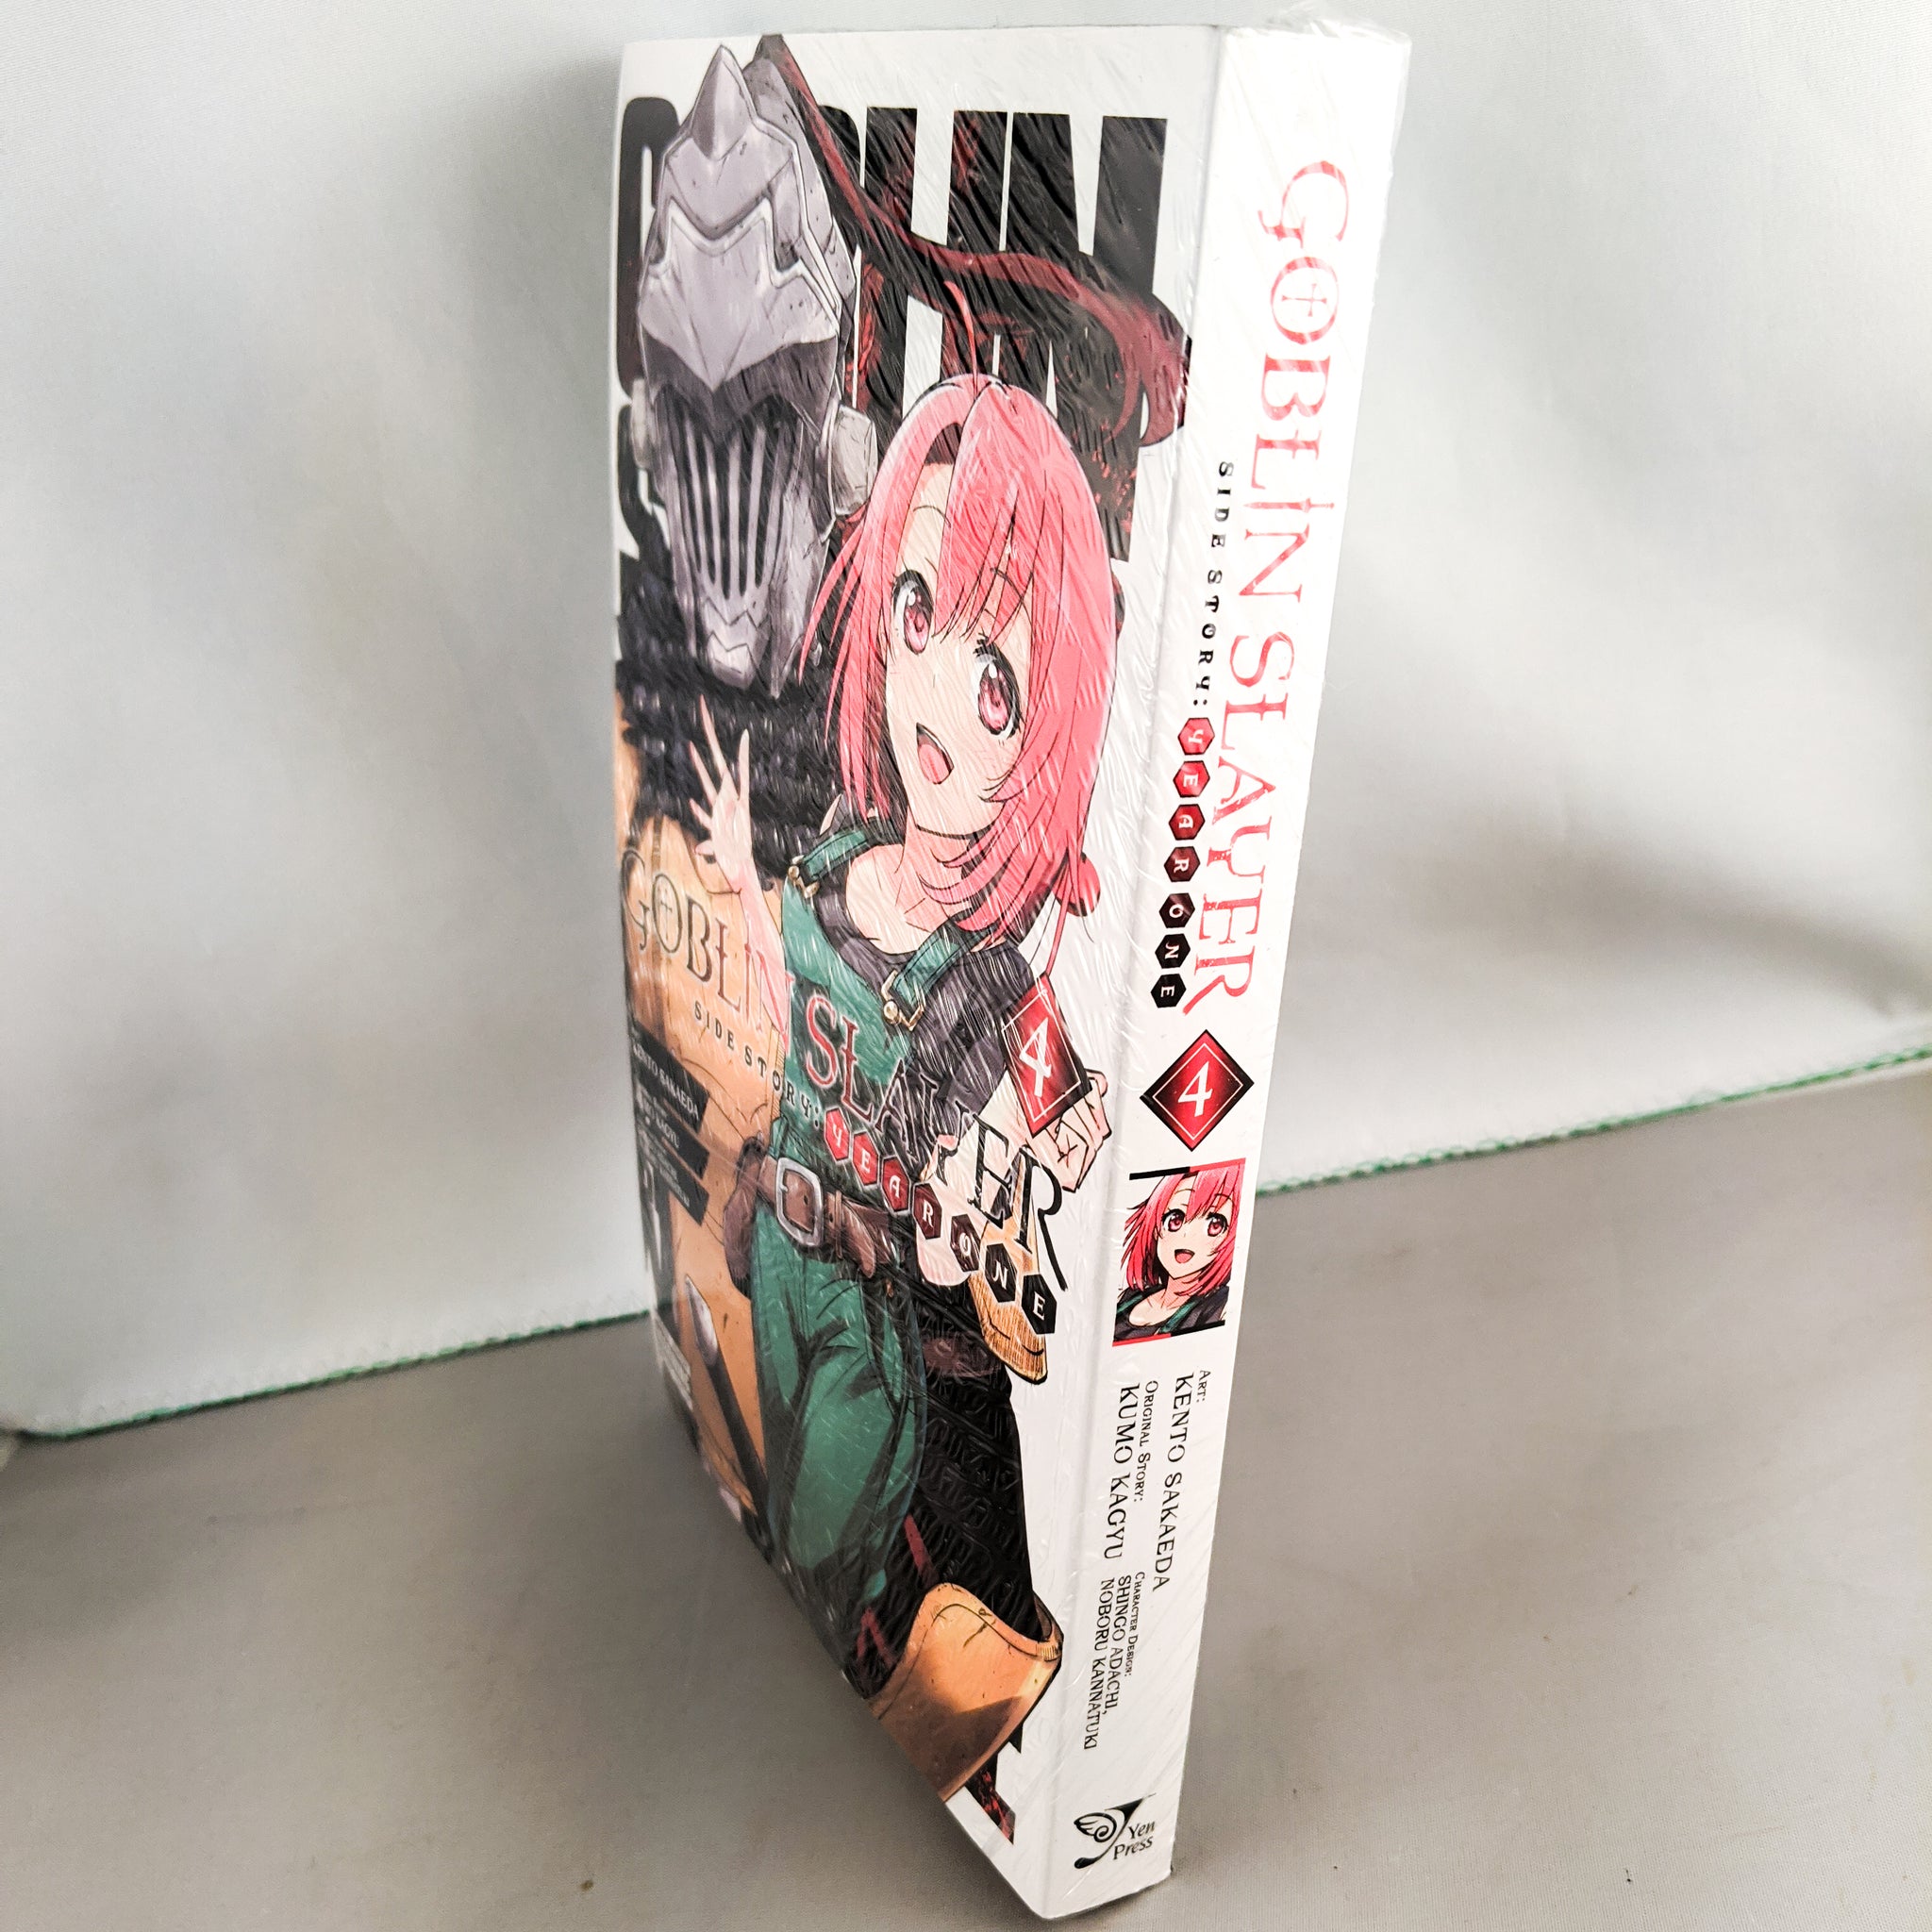 Goblin Slayer Side Story: Year One, Vol. 4 (manga) - (goblin